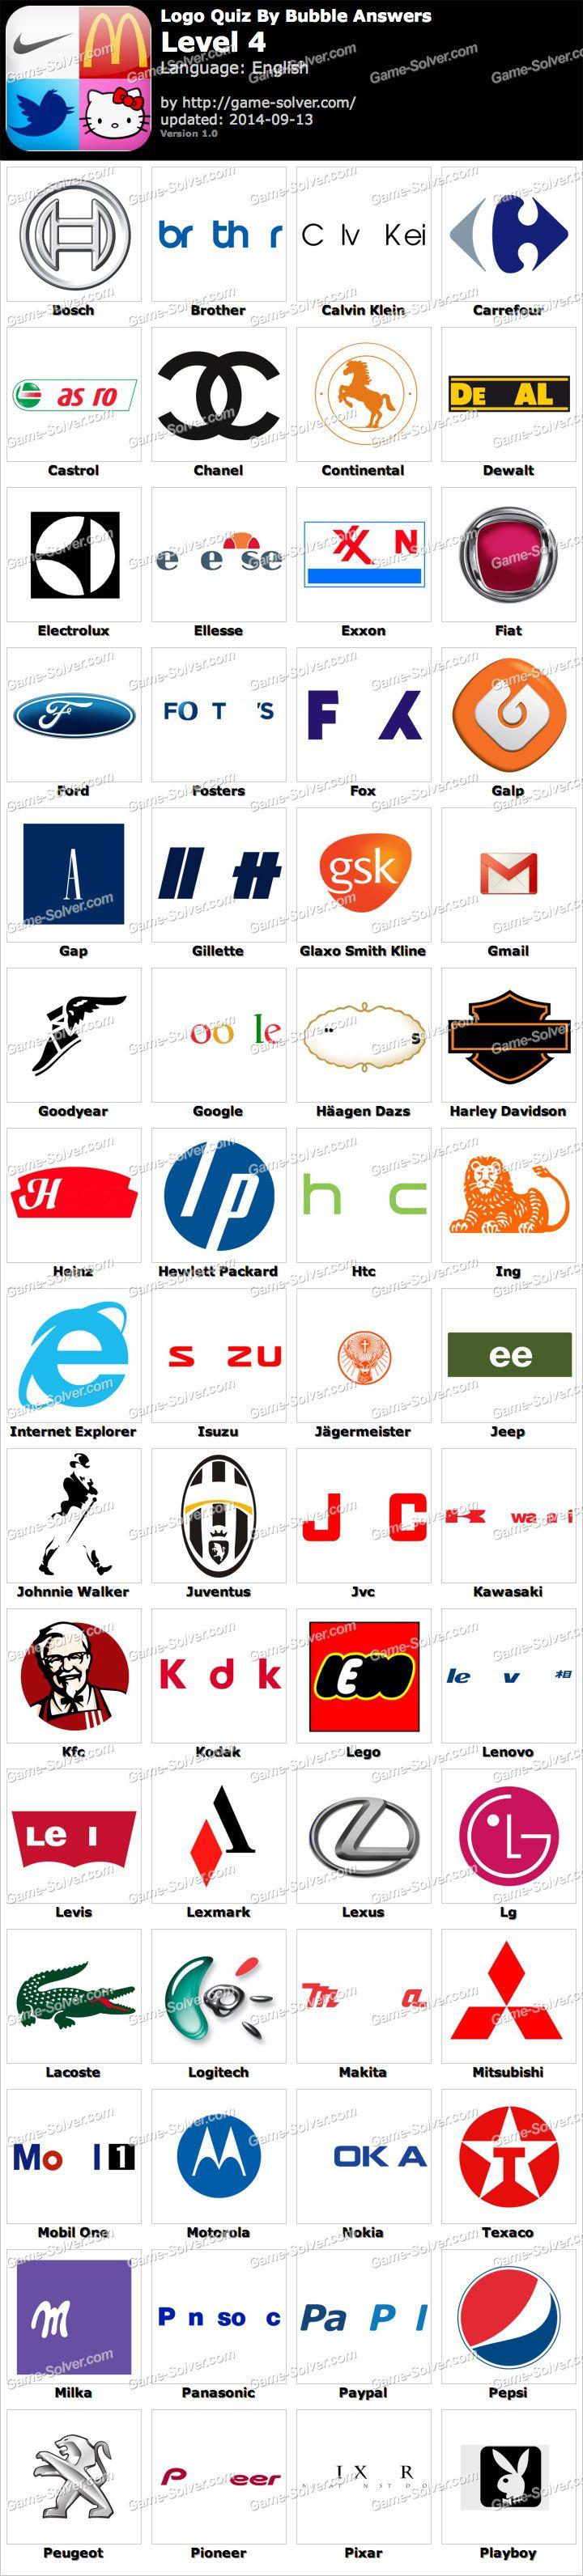 Japanese Electronics Company Logo - Japanese Electronics Corp Manufactures Logos Installation Of